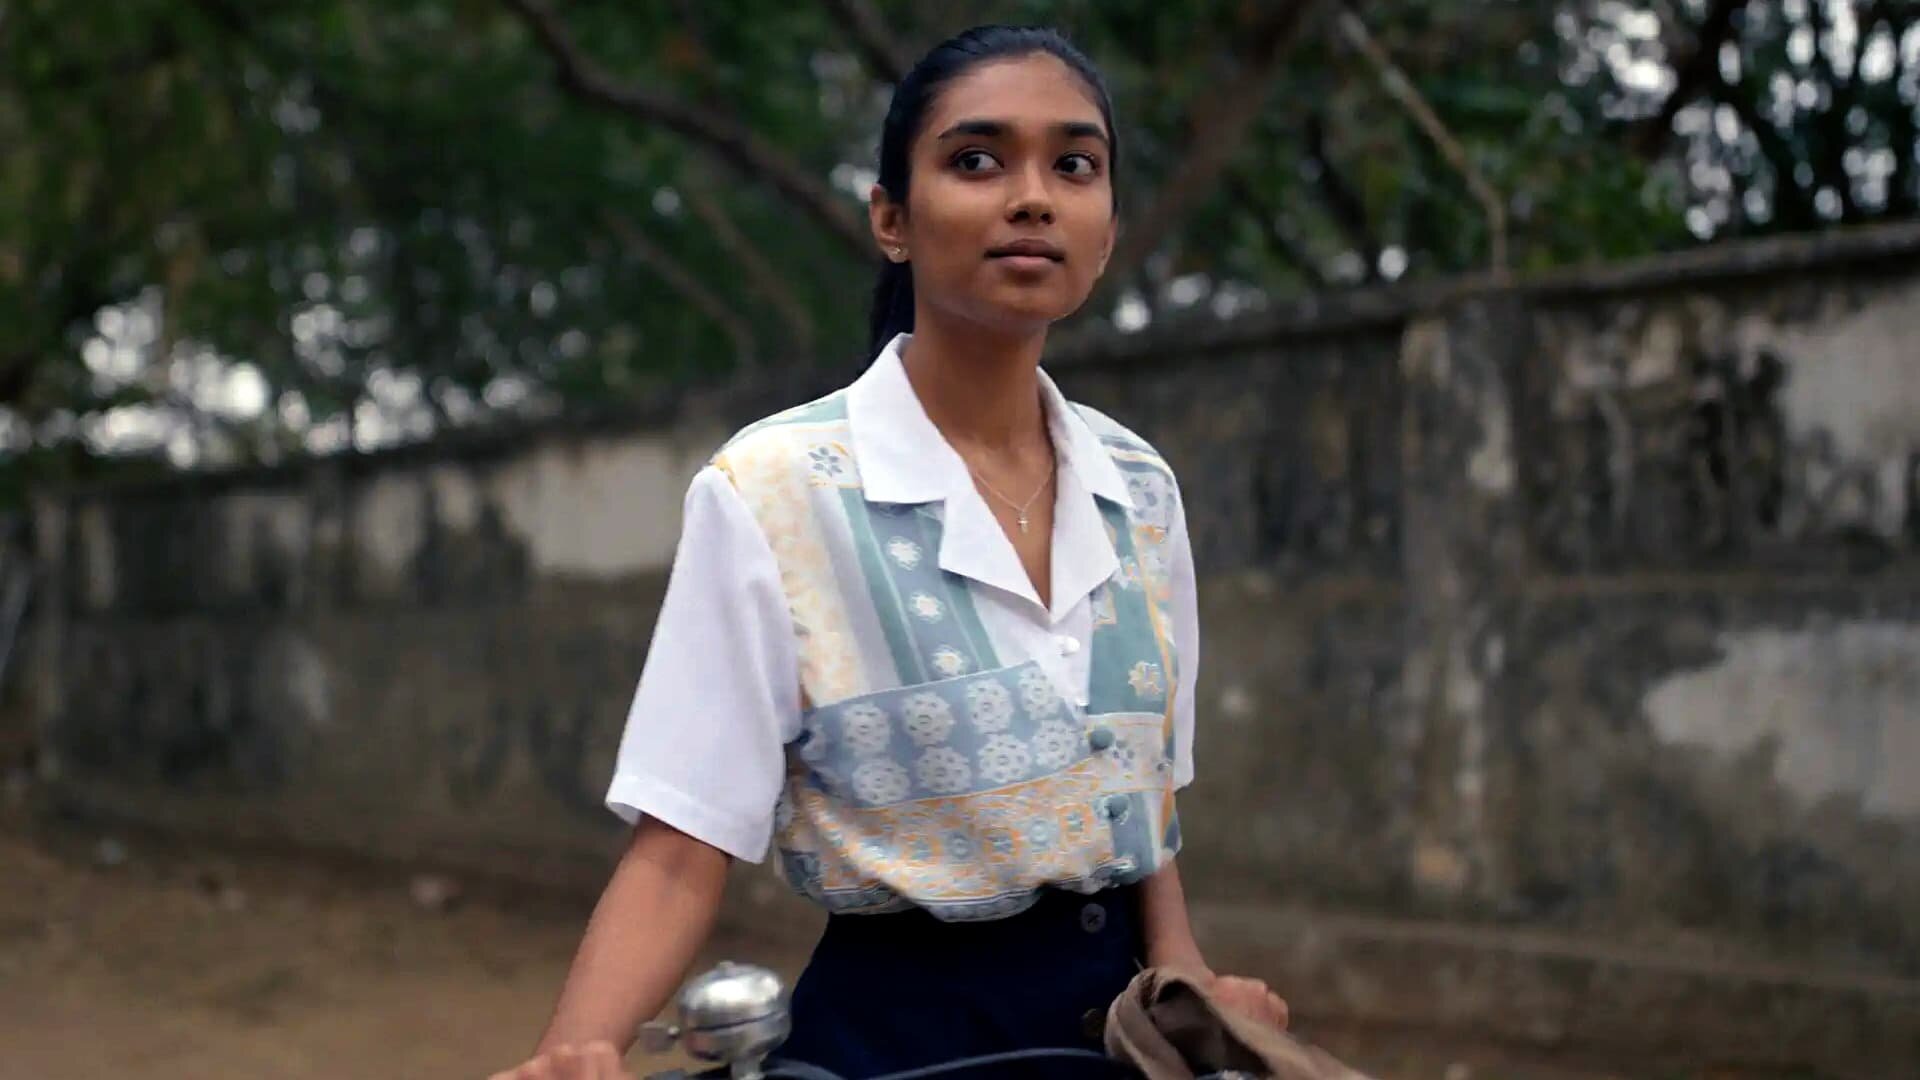 Margazhi - Modern Love Chennai 1x04 | TVmaze